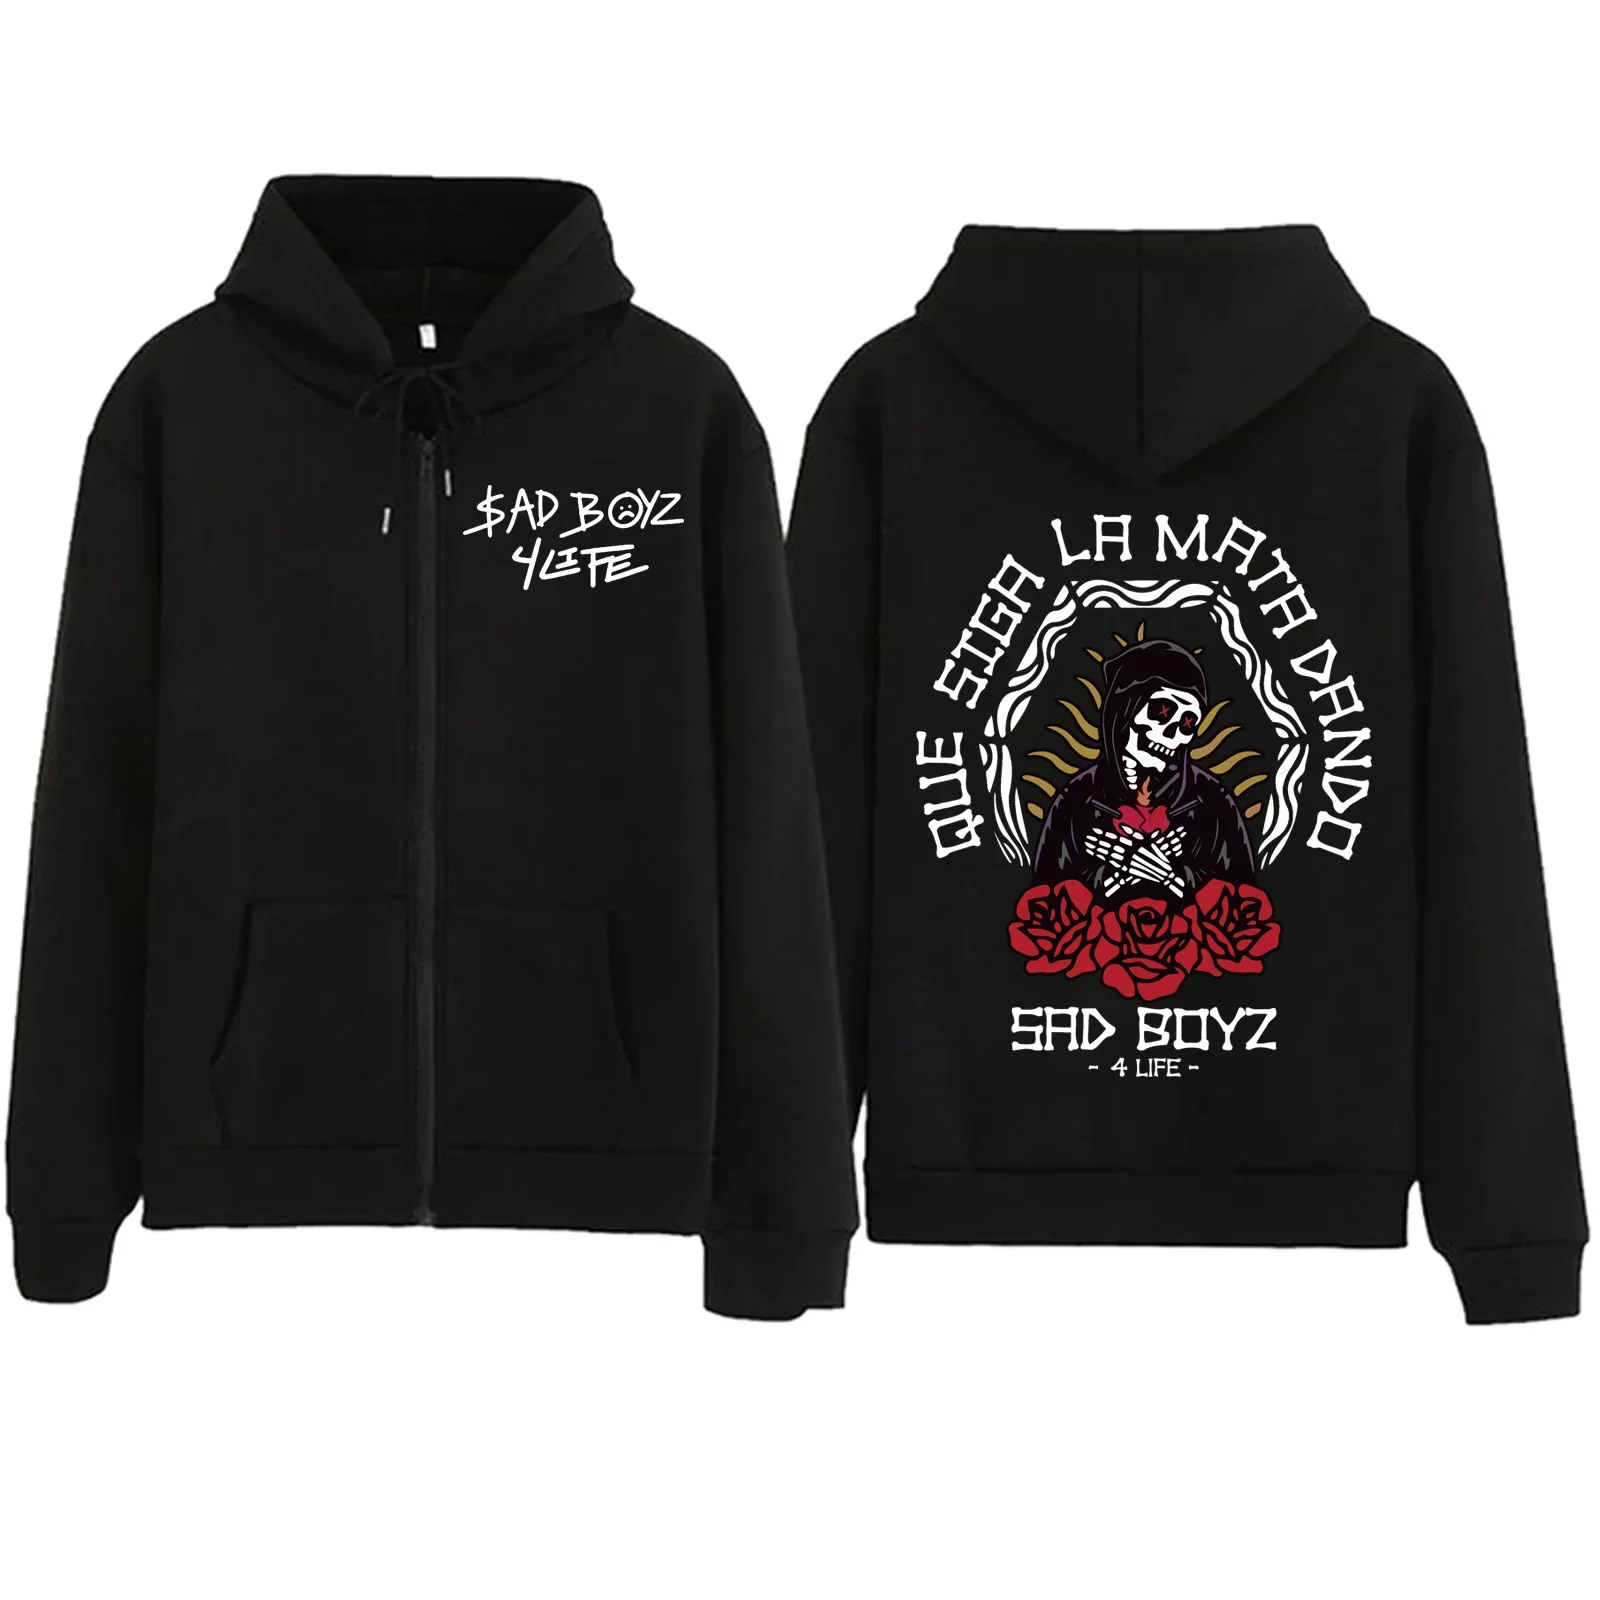 

Junior H Sad Boyz 4 Life Zip Up Hoodie Women Men Harajuku Sweatshirt Streetwear Hip Hop Zipper Hooded Jacket Casual Sportswear